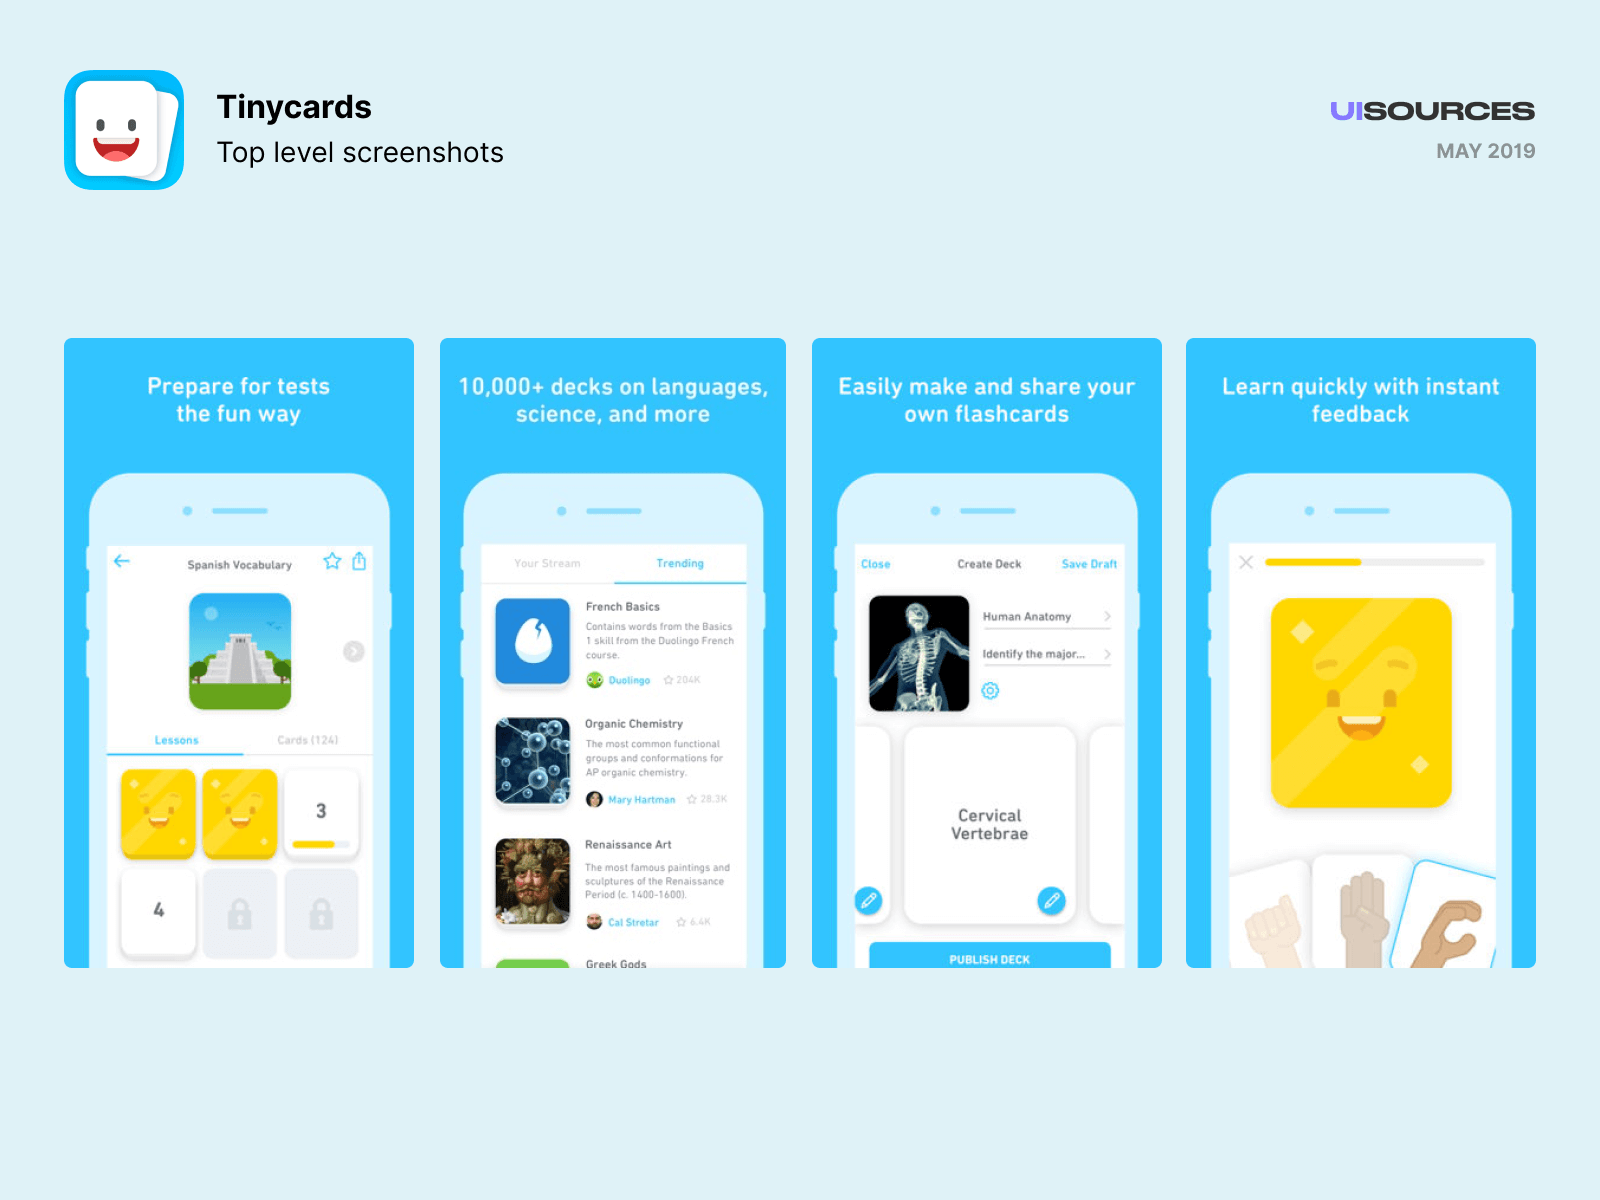 App Store screenshots